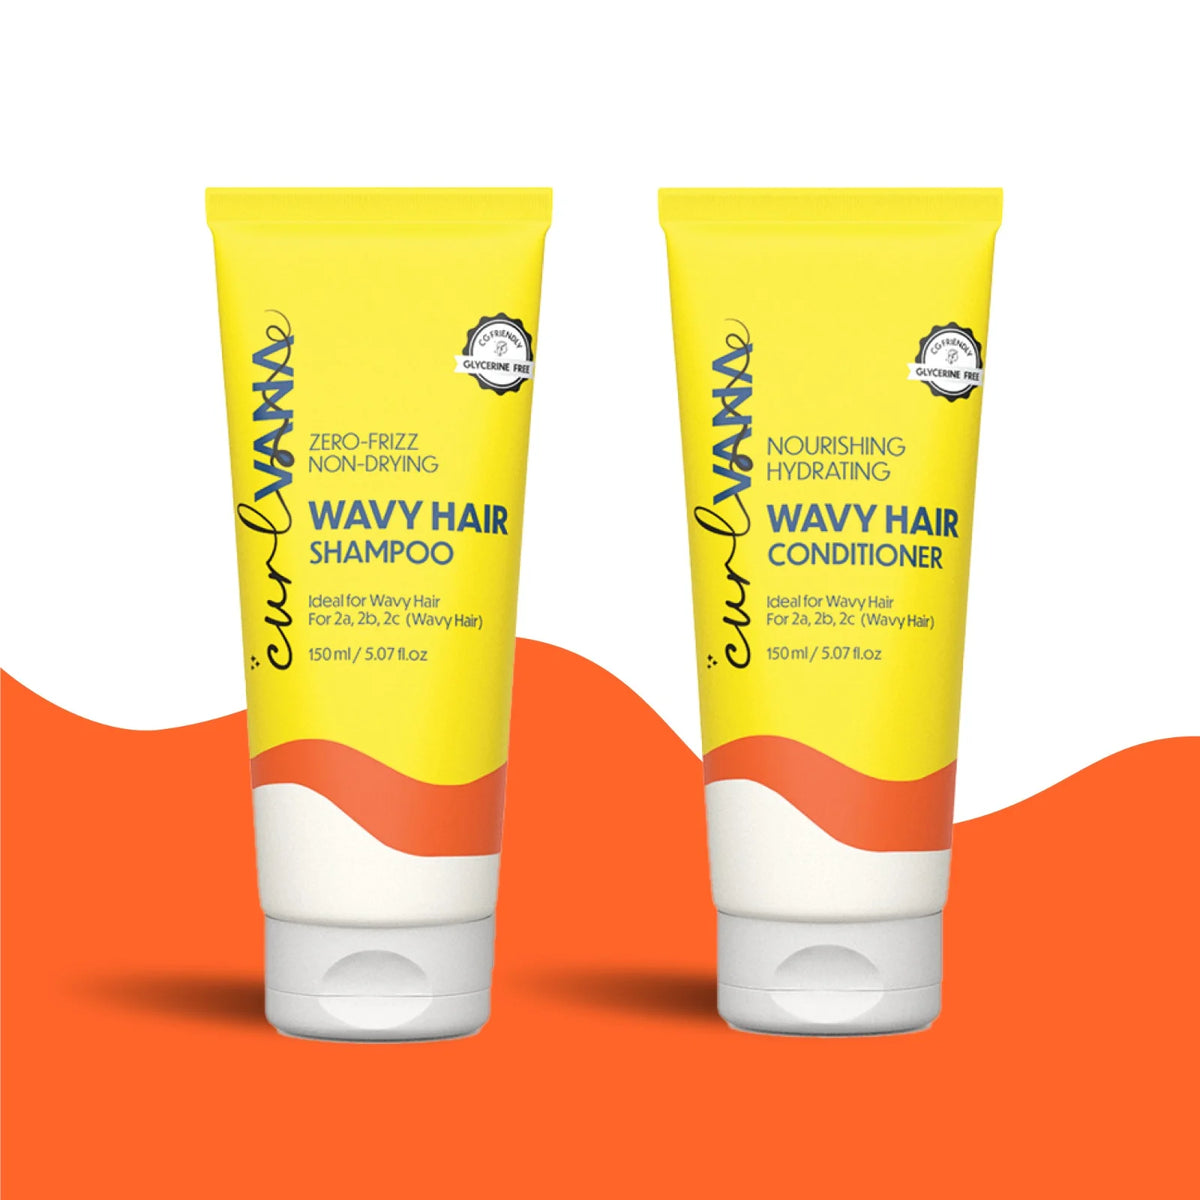 Curlvana Wavy Hair Care Range with Shampoo (150ml), Conditioner (150ml)